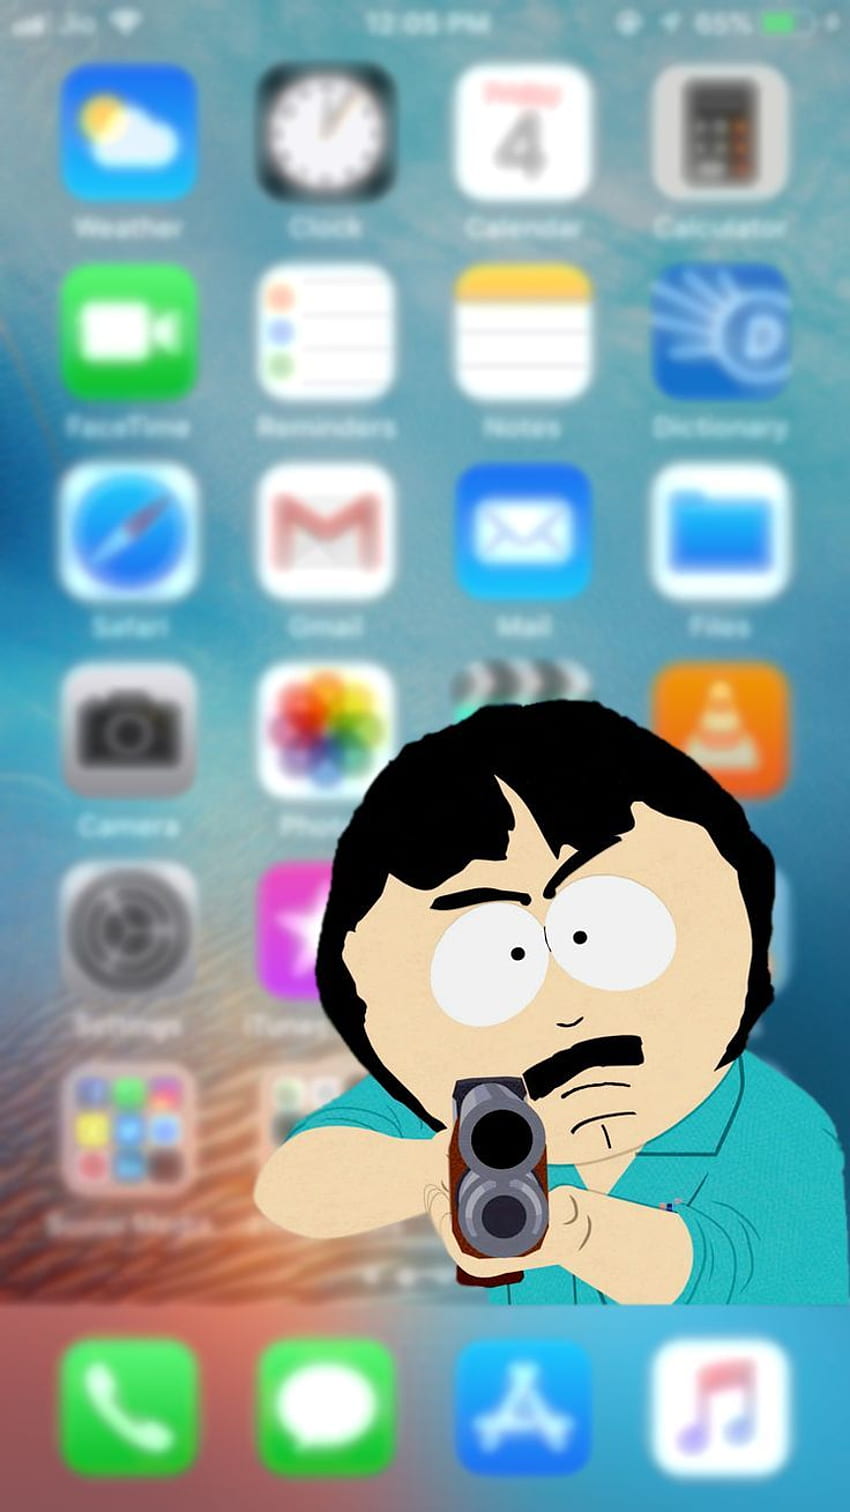 South Park iphone Randy Marsh locksreen. Ideas de fondos de pantalla, Fondos de whatsap,. South park funny, South park, Cool iphone for boys, Funny South Park HD phone wallpaper